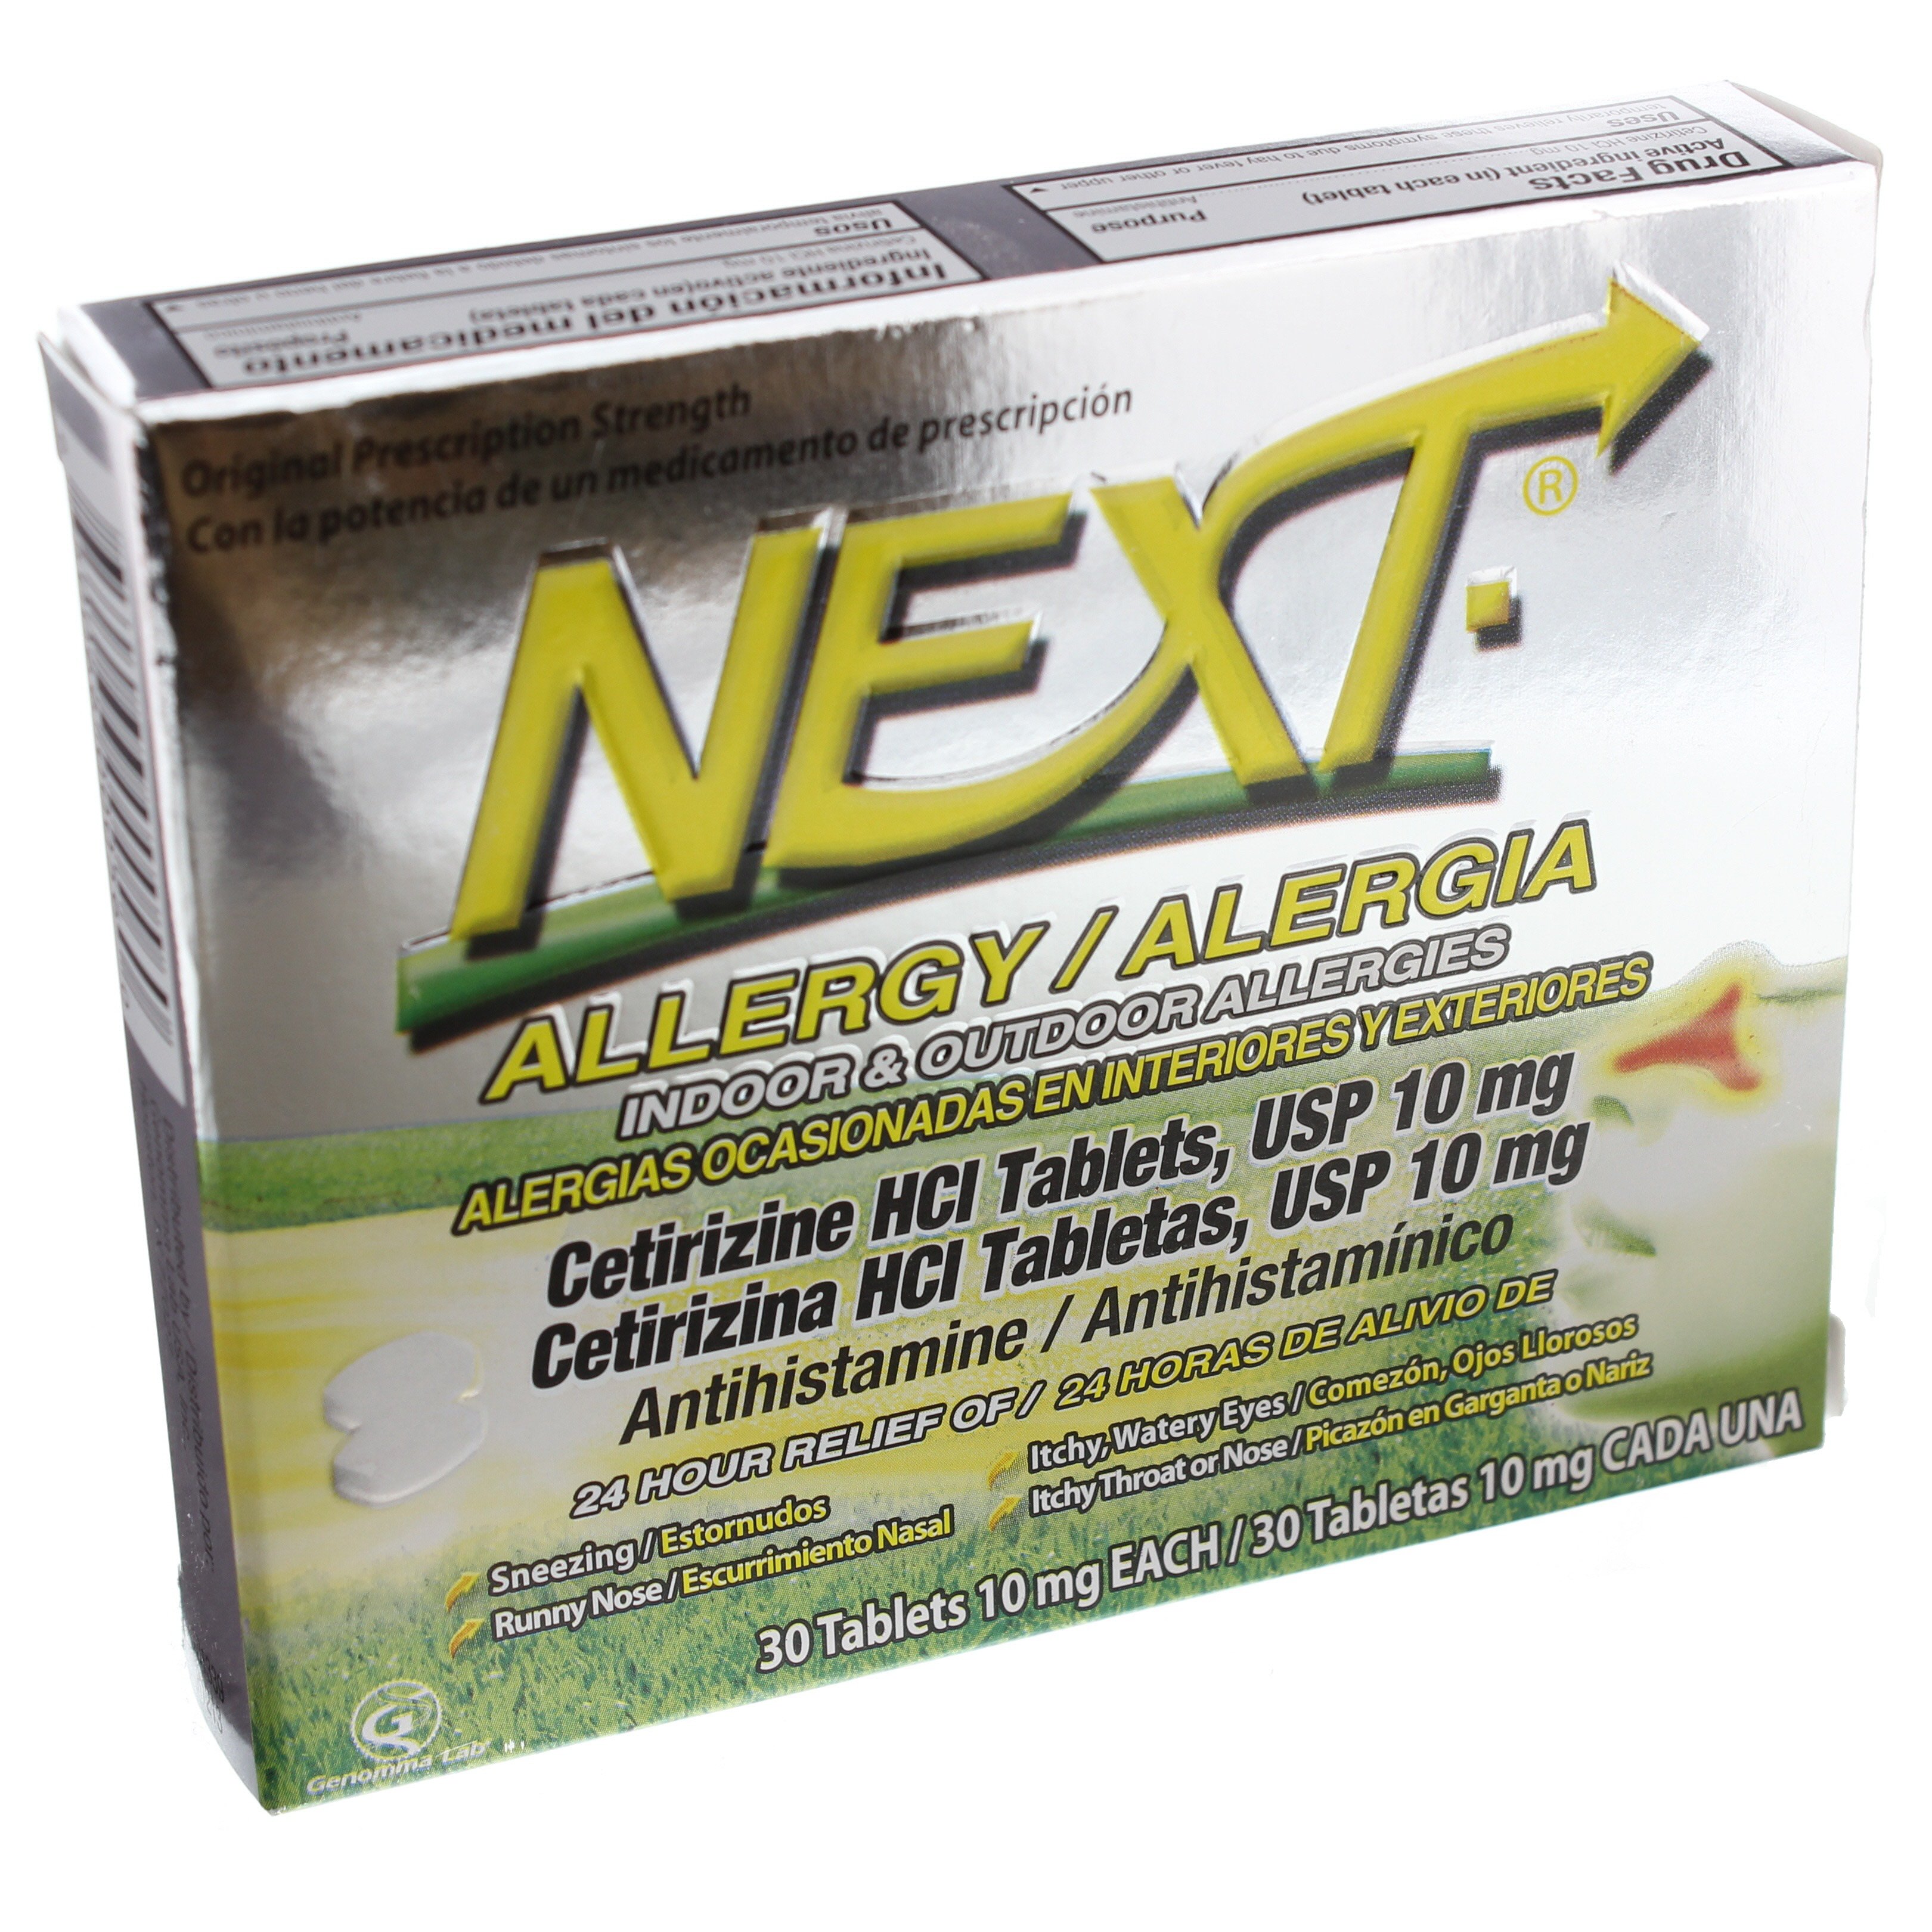 Next Allergy Tablets - Shop Next Allergy Tablets - Shop Next Allergy